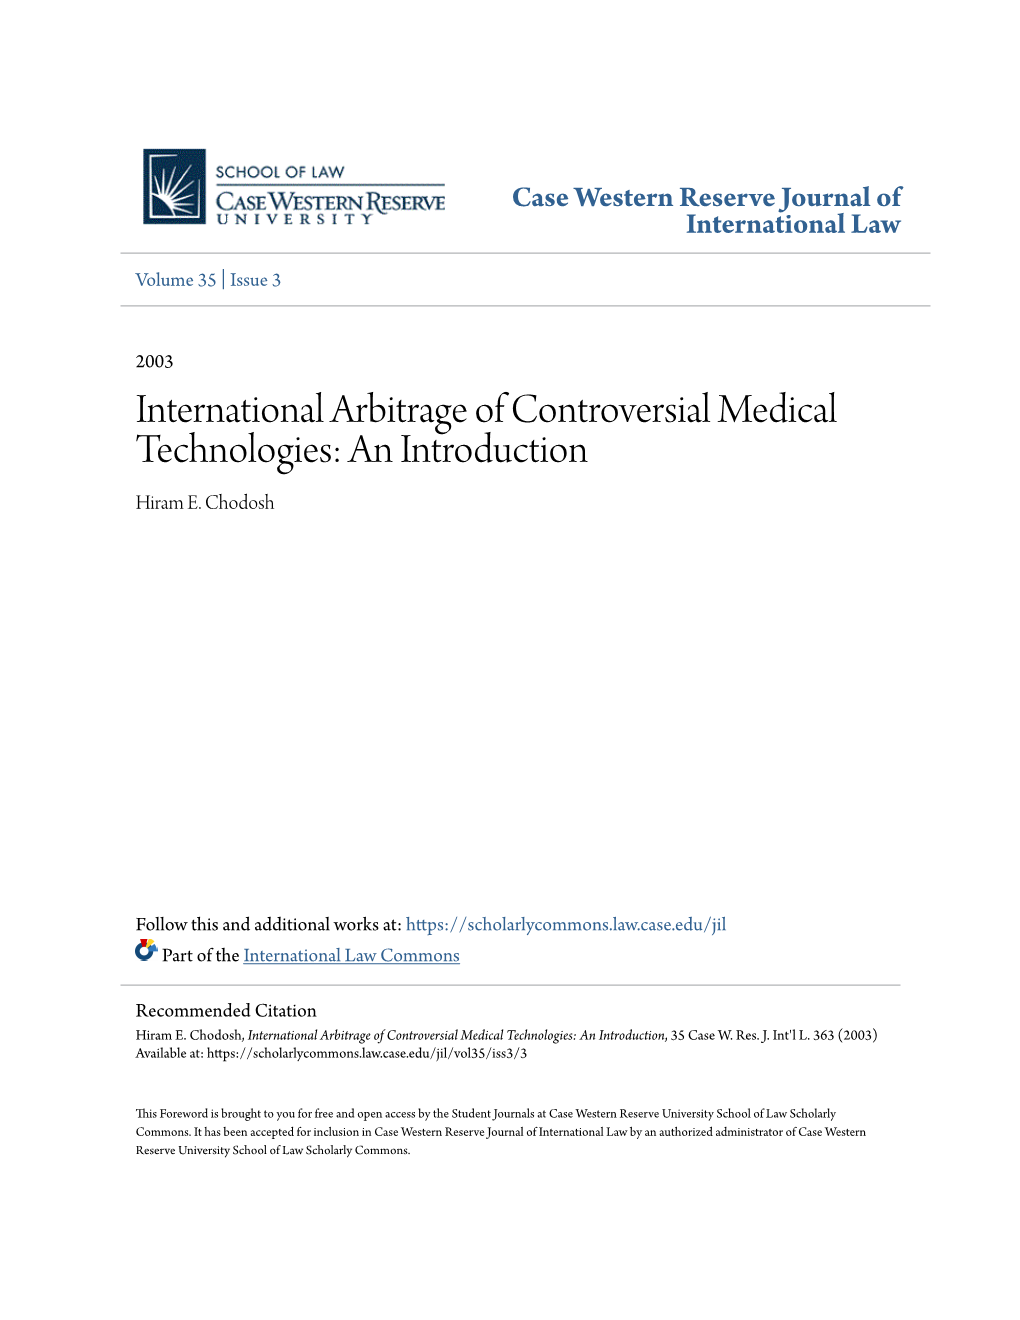 International Arbitrage of Controversial Medical Technologies: an Introduction Hiram E